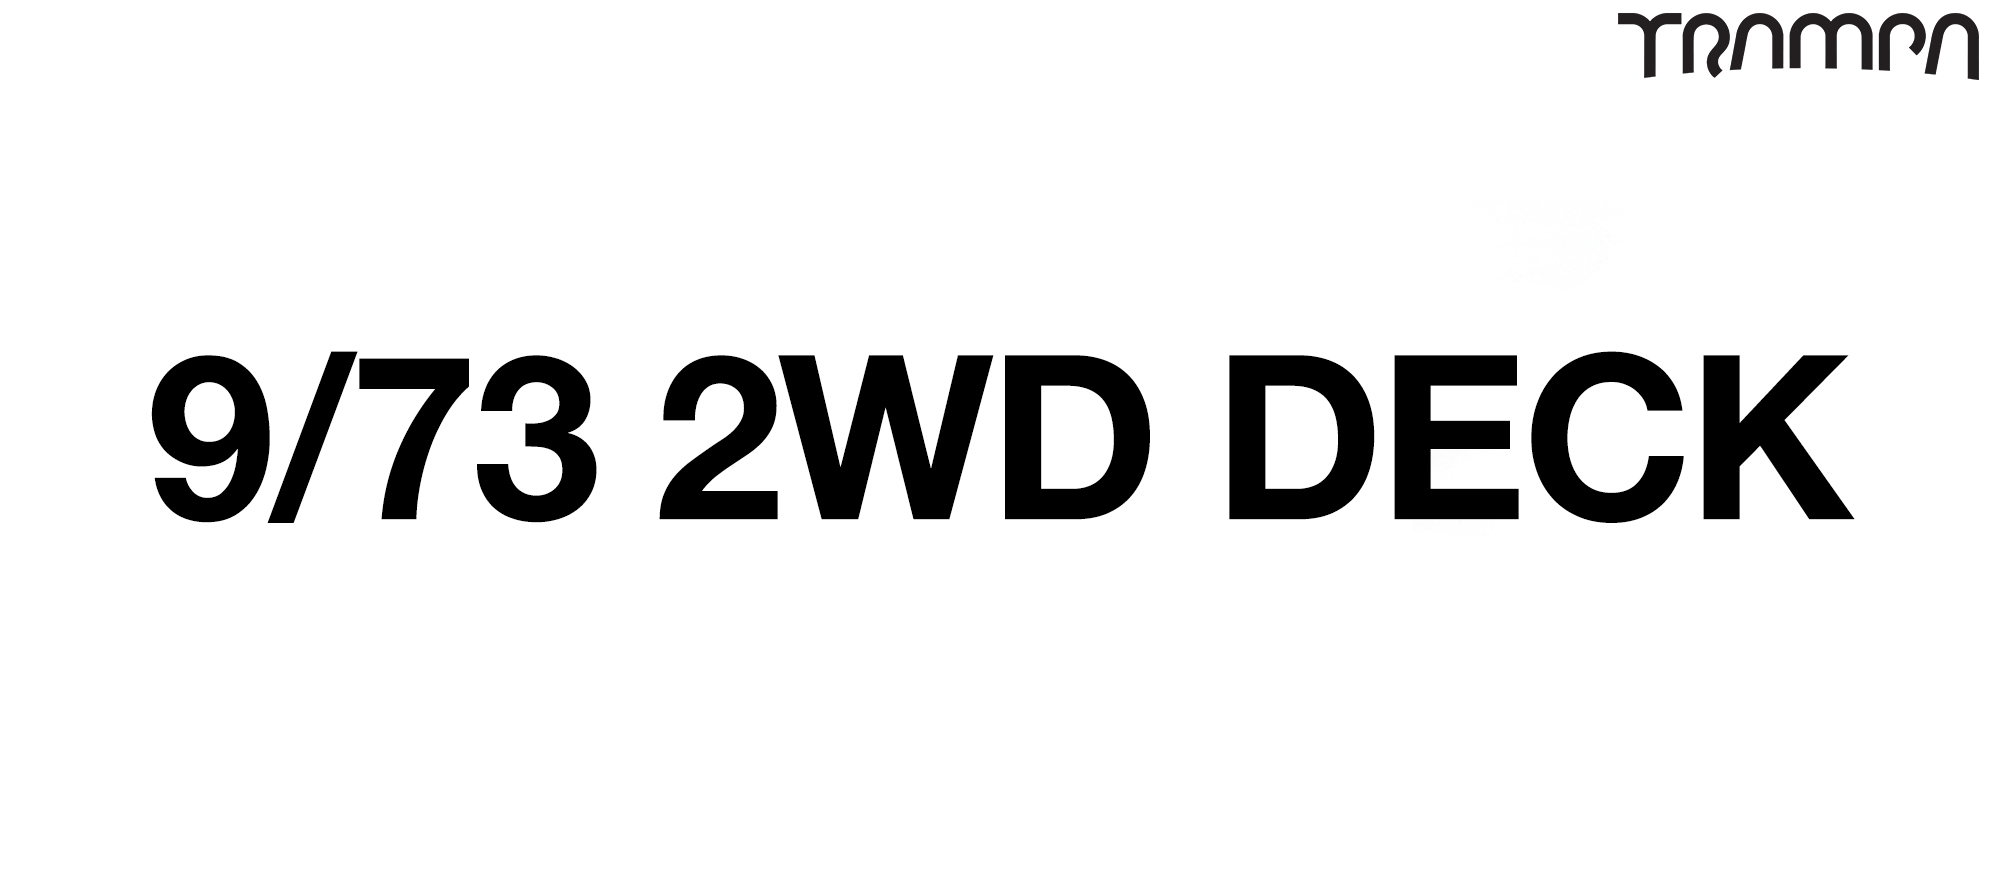 9/73 2WD DECK